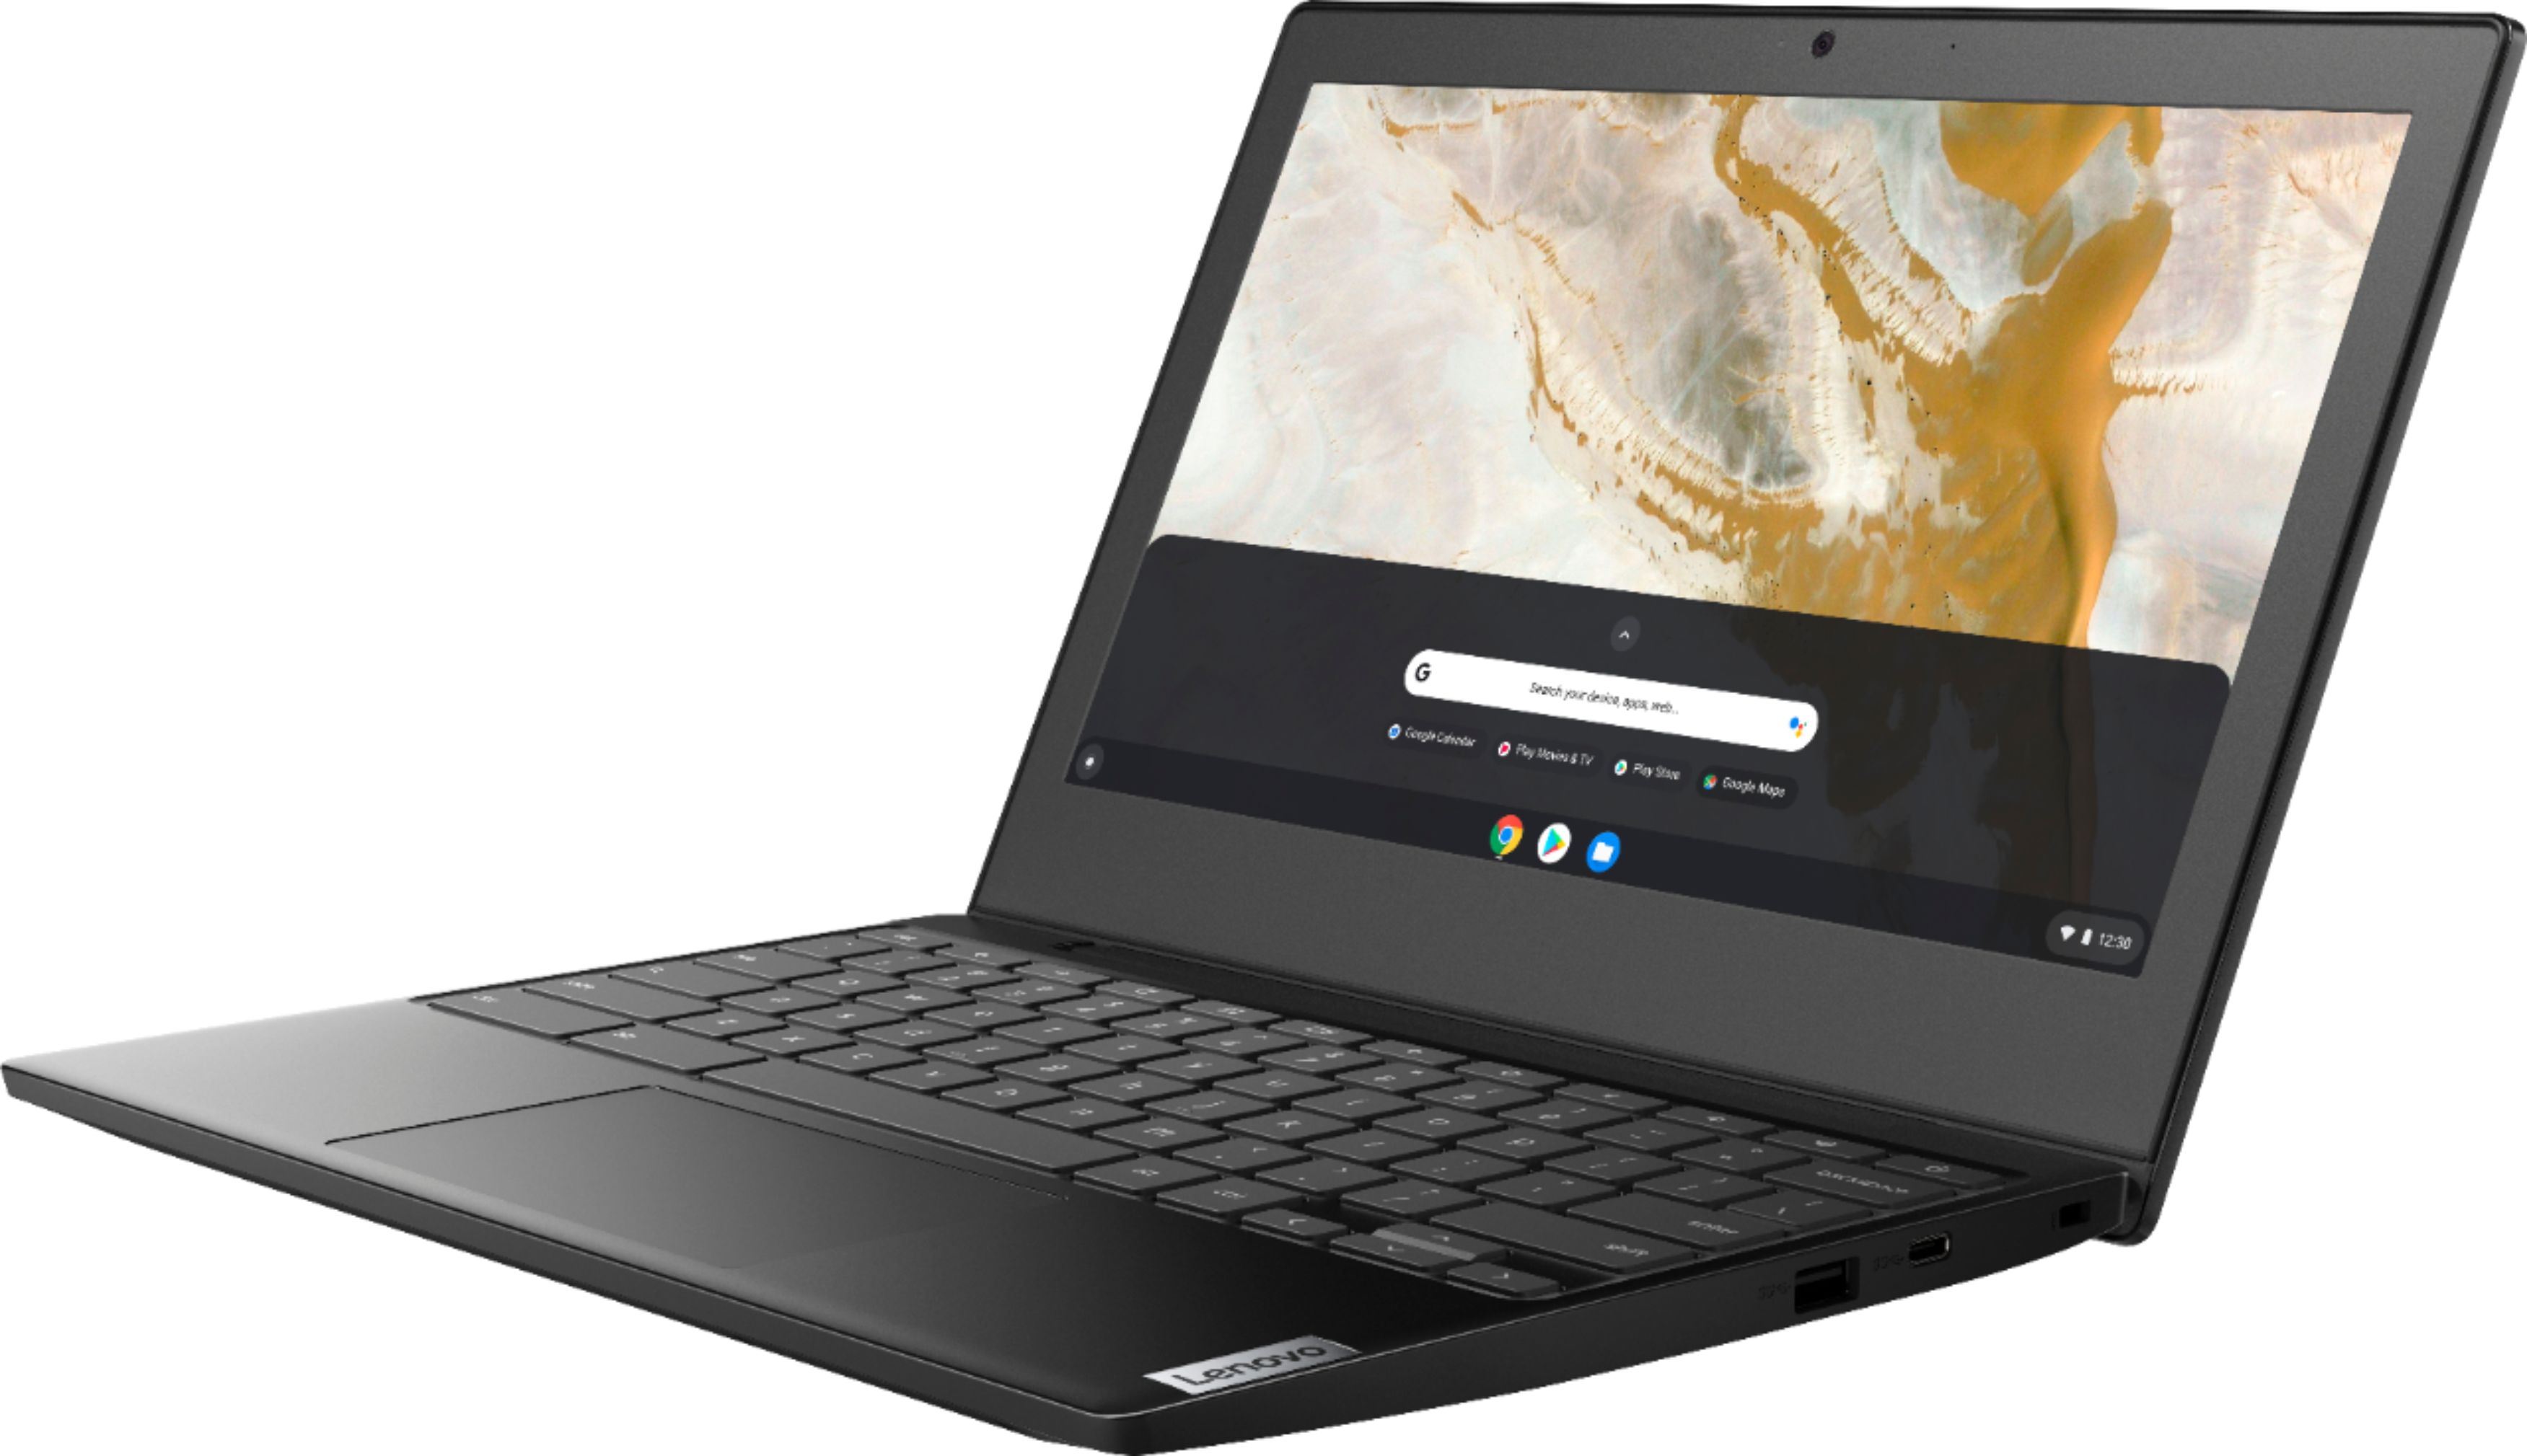 Lenovo - Chromebook 3 11